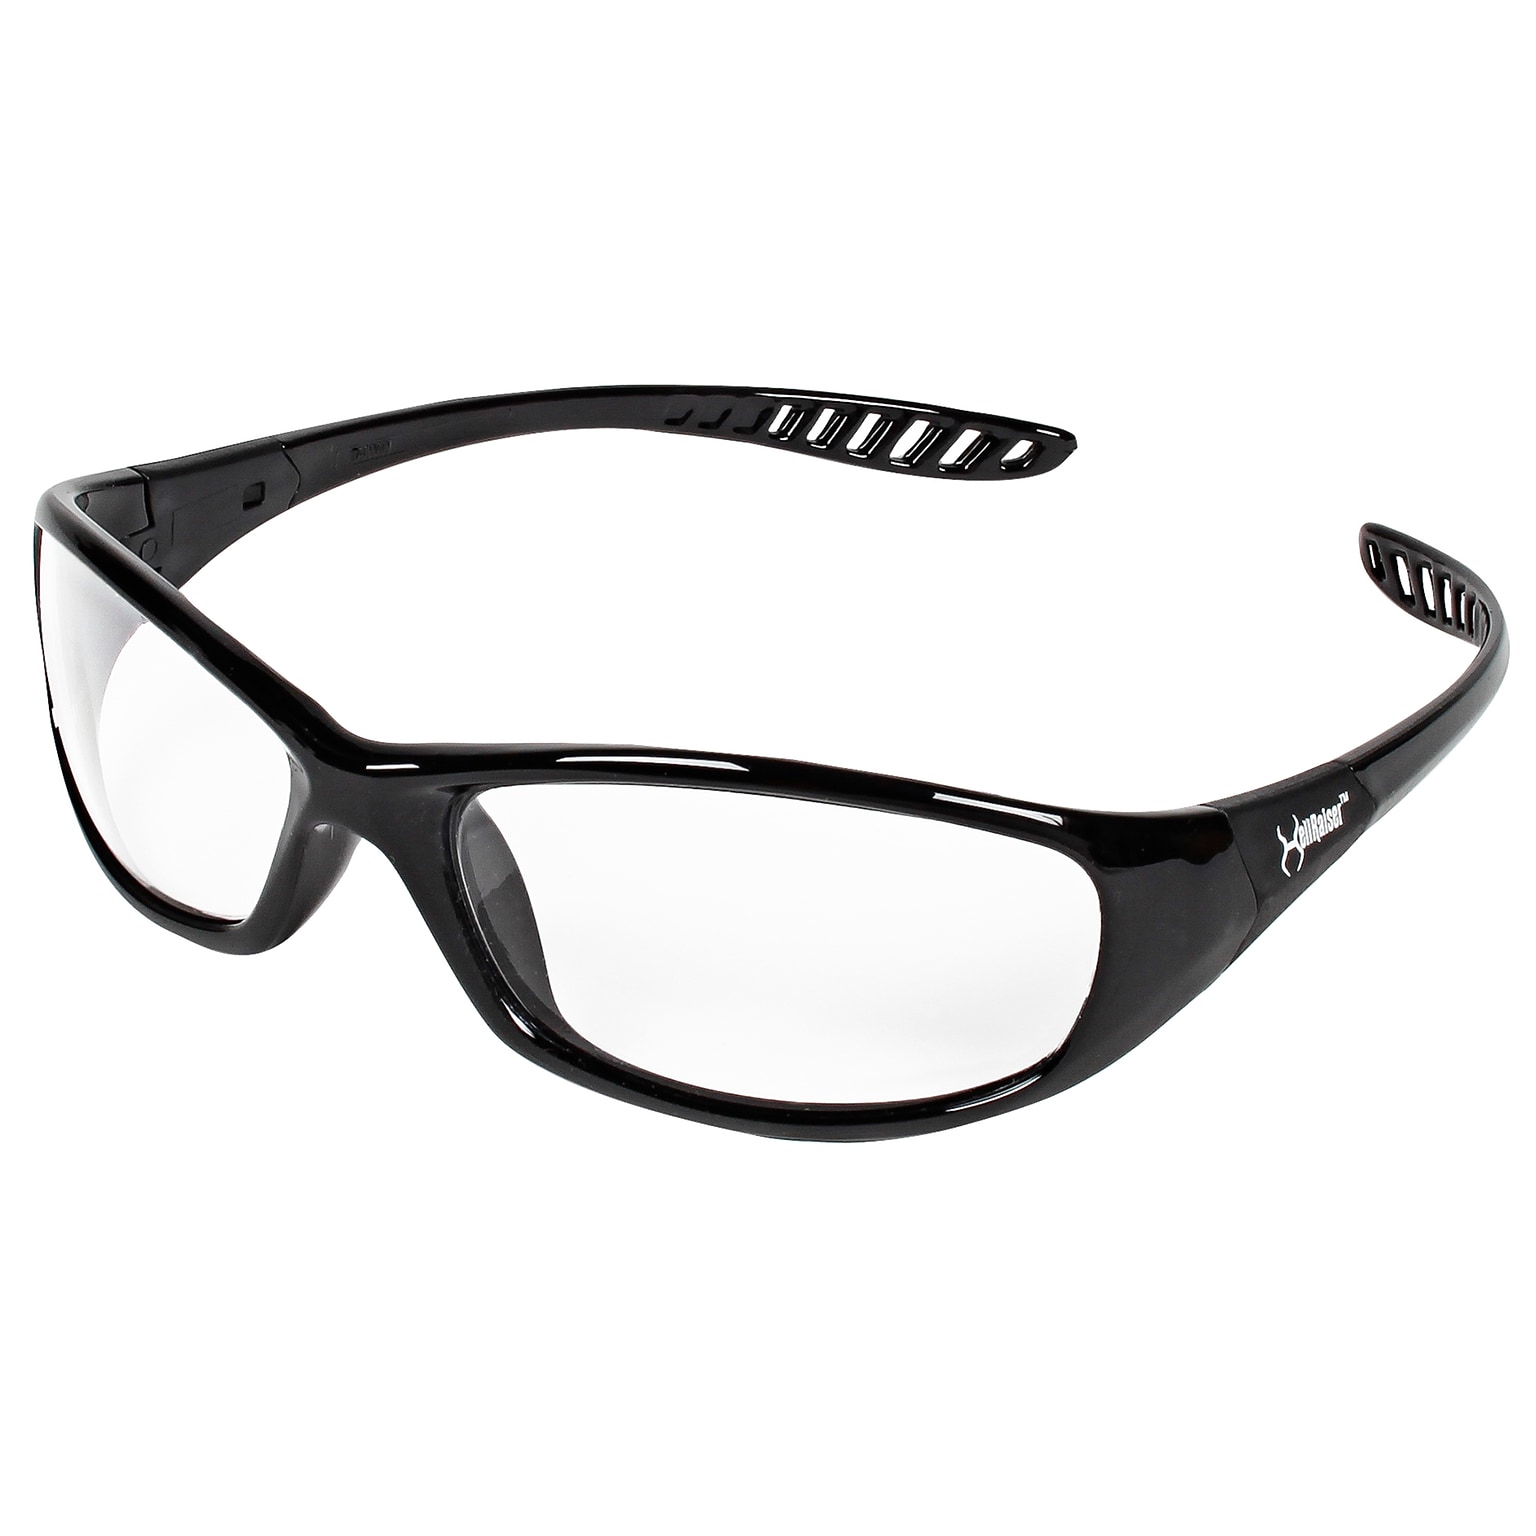 Jackson Safety® Eyewear, V40 HellRaiser®, Clear Anti-Fog Lense, Black Frame